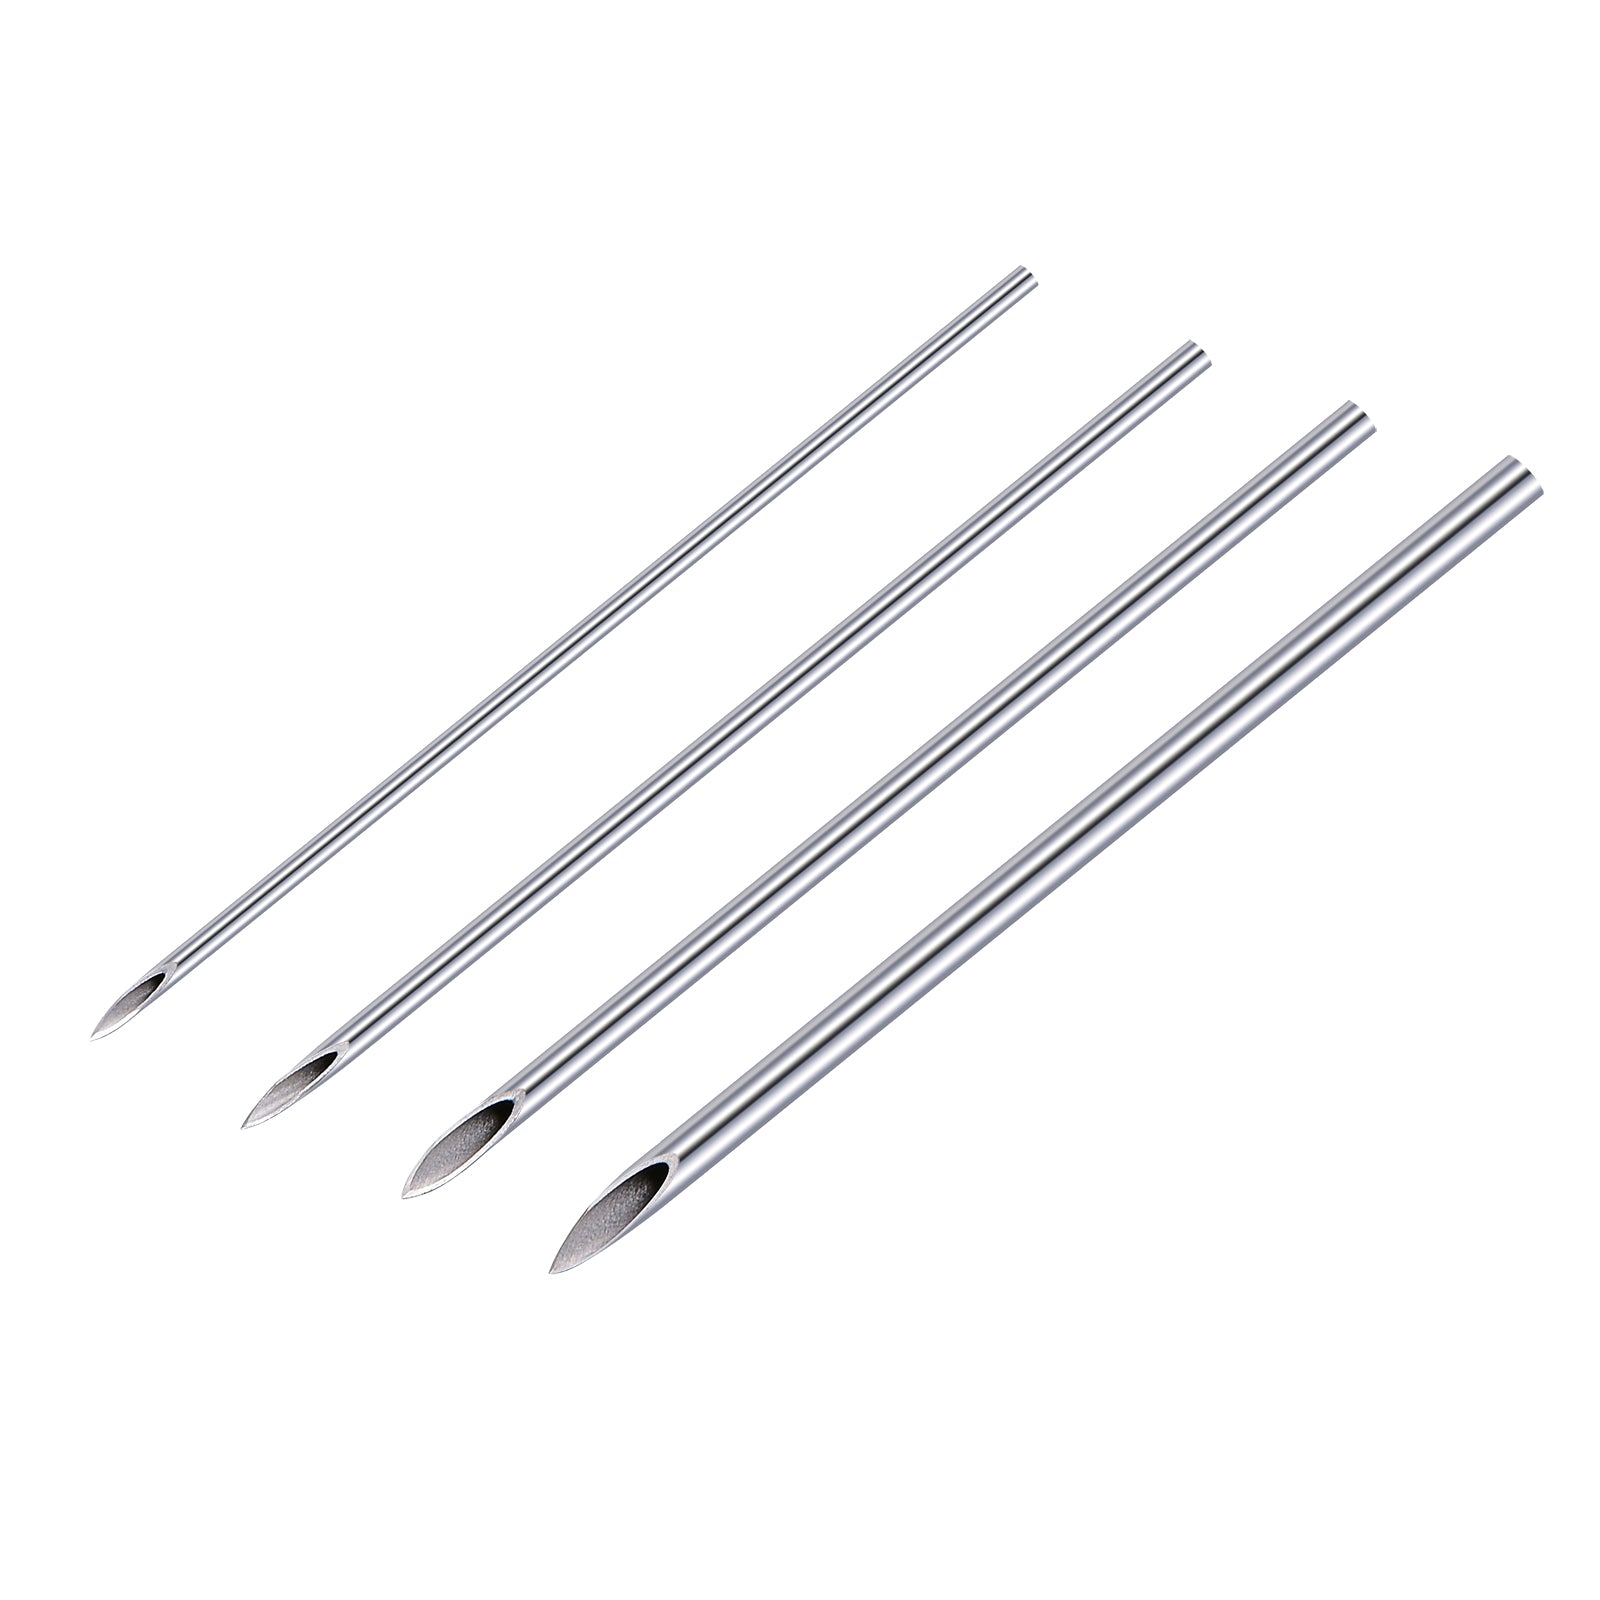 100PCS Mixed Body Piercing Needles, 14G 16G 18G 20G Stainless